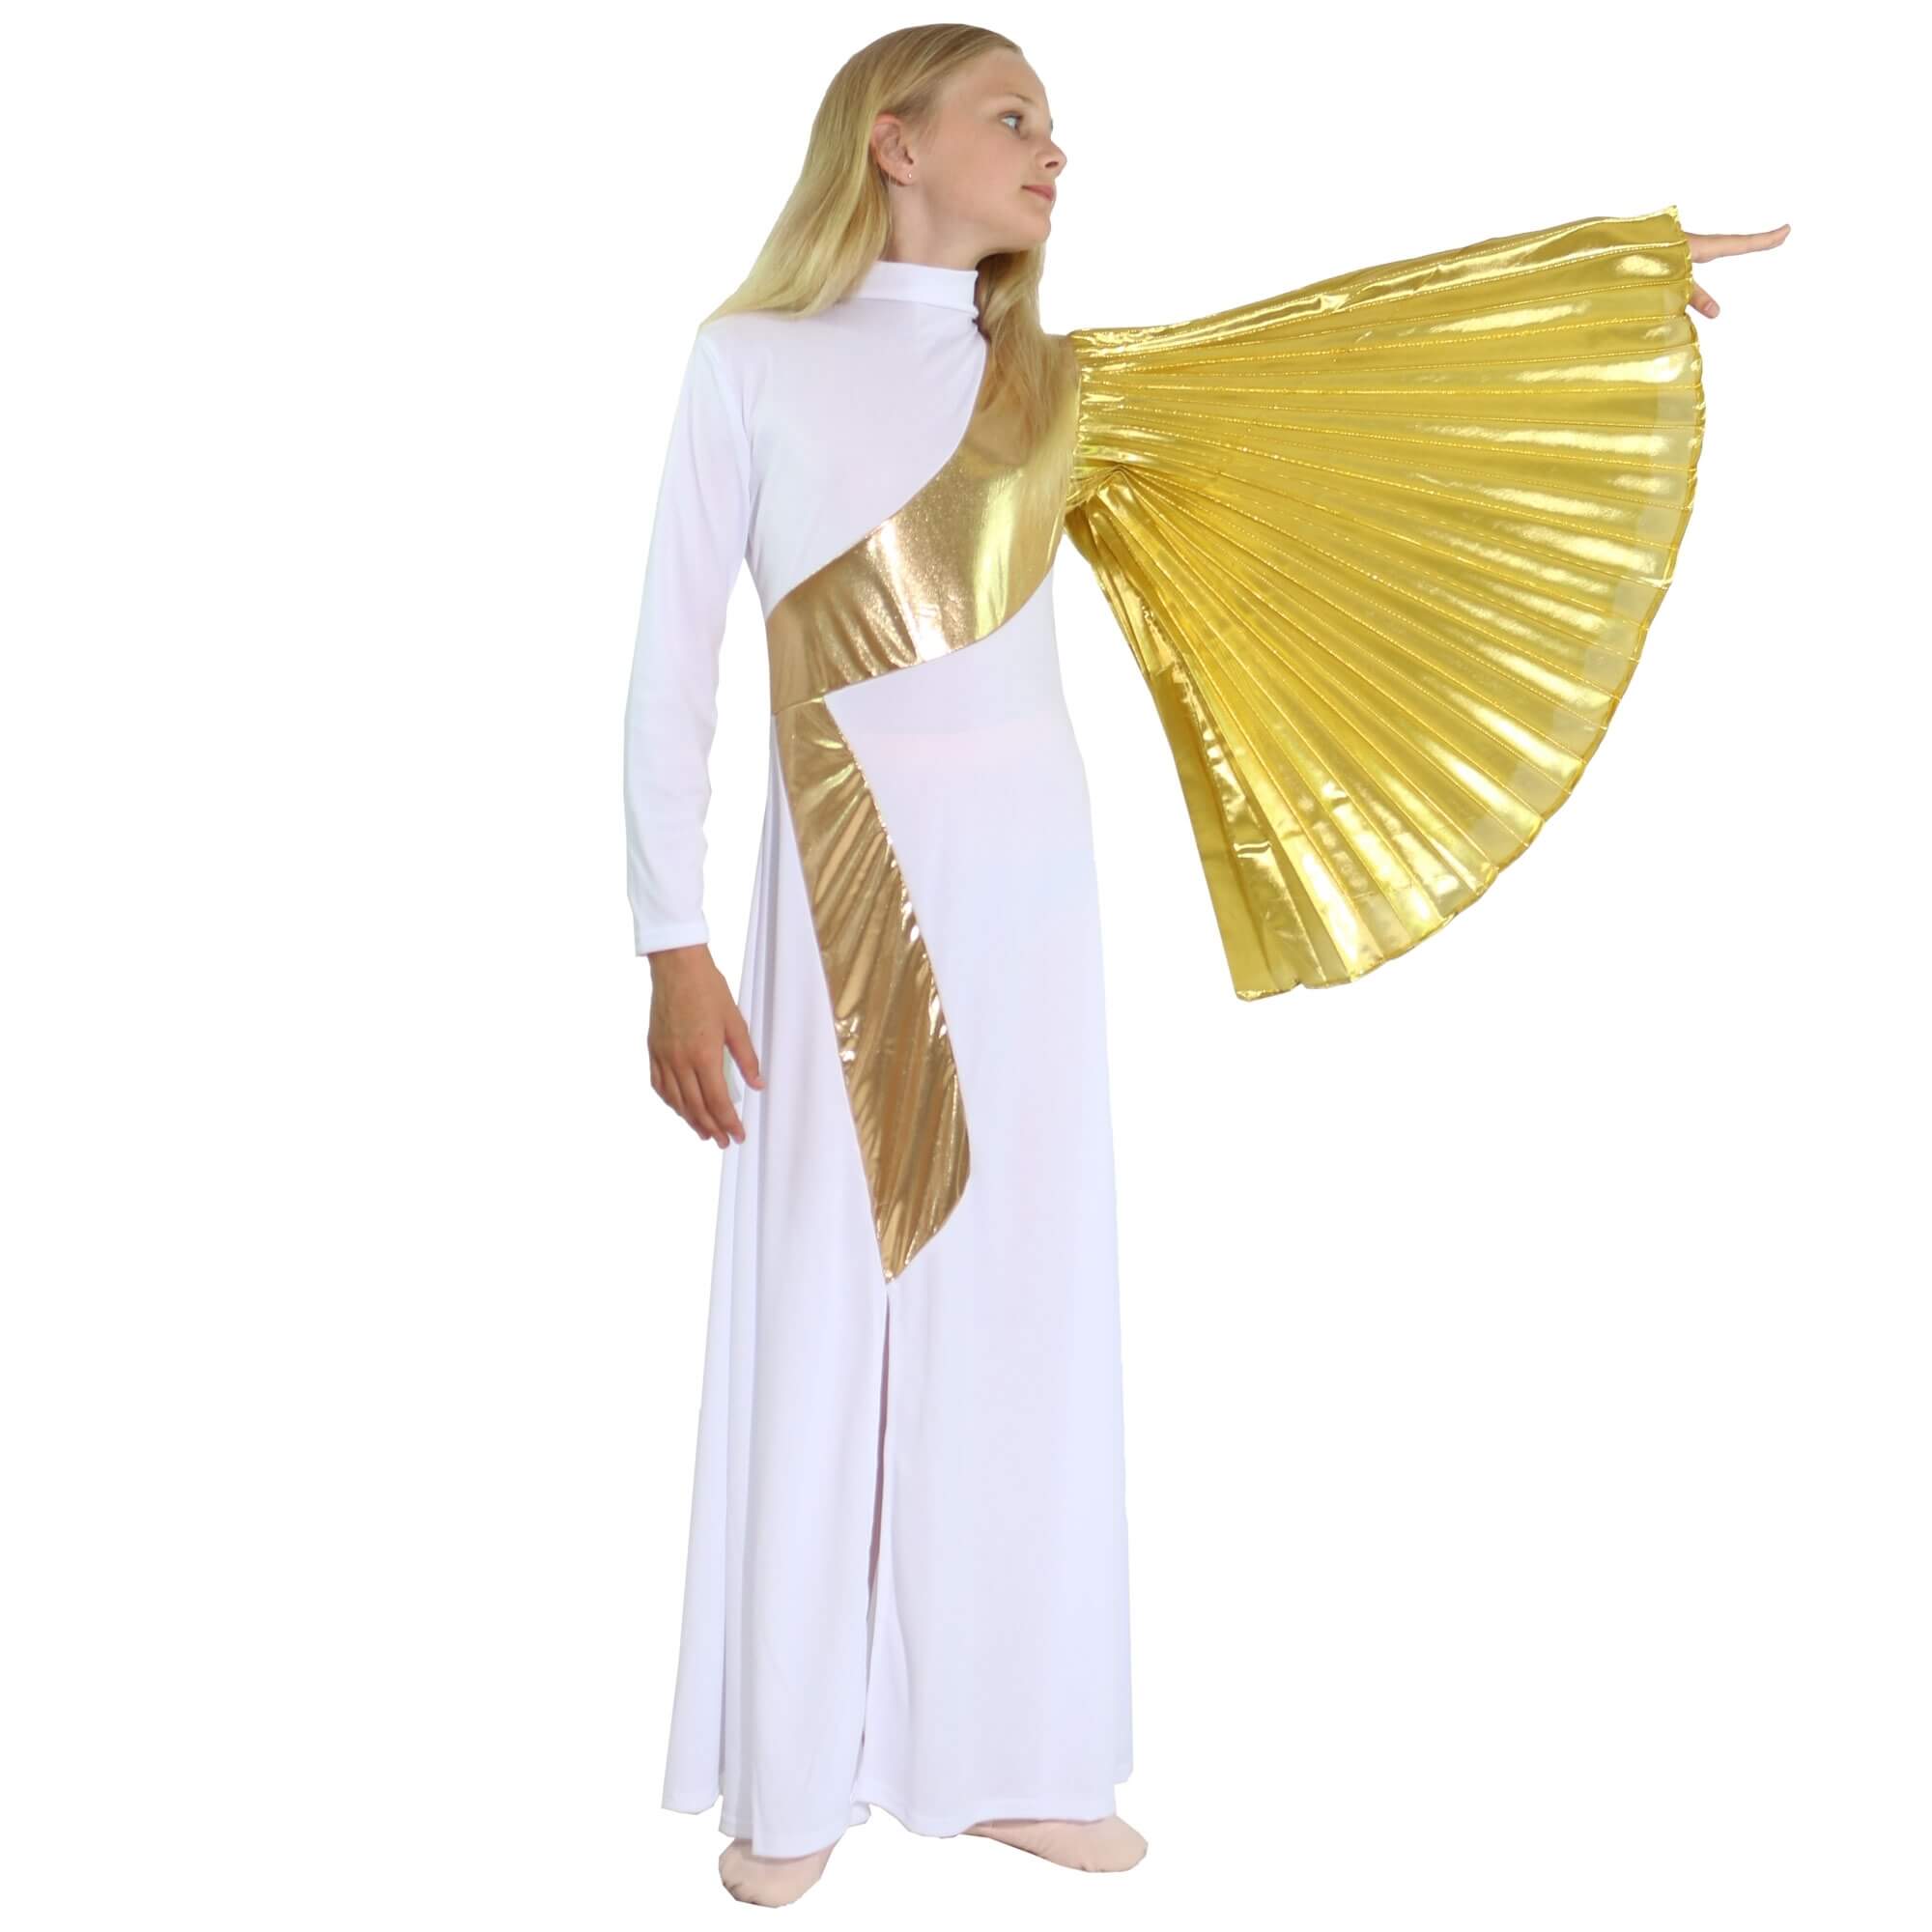 Danzcue Child Praise Wing Dress - Click Image to Close